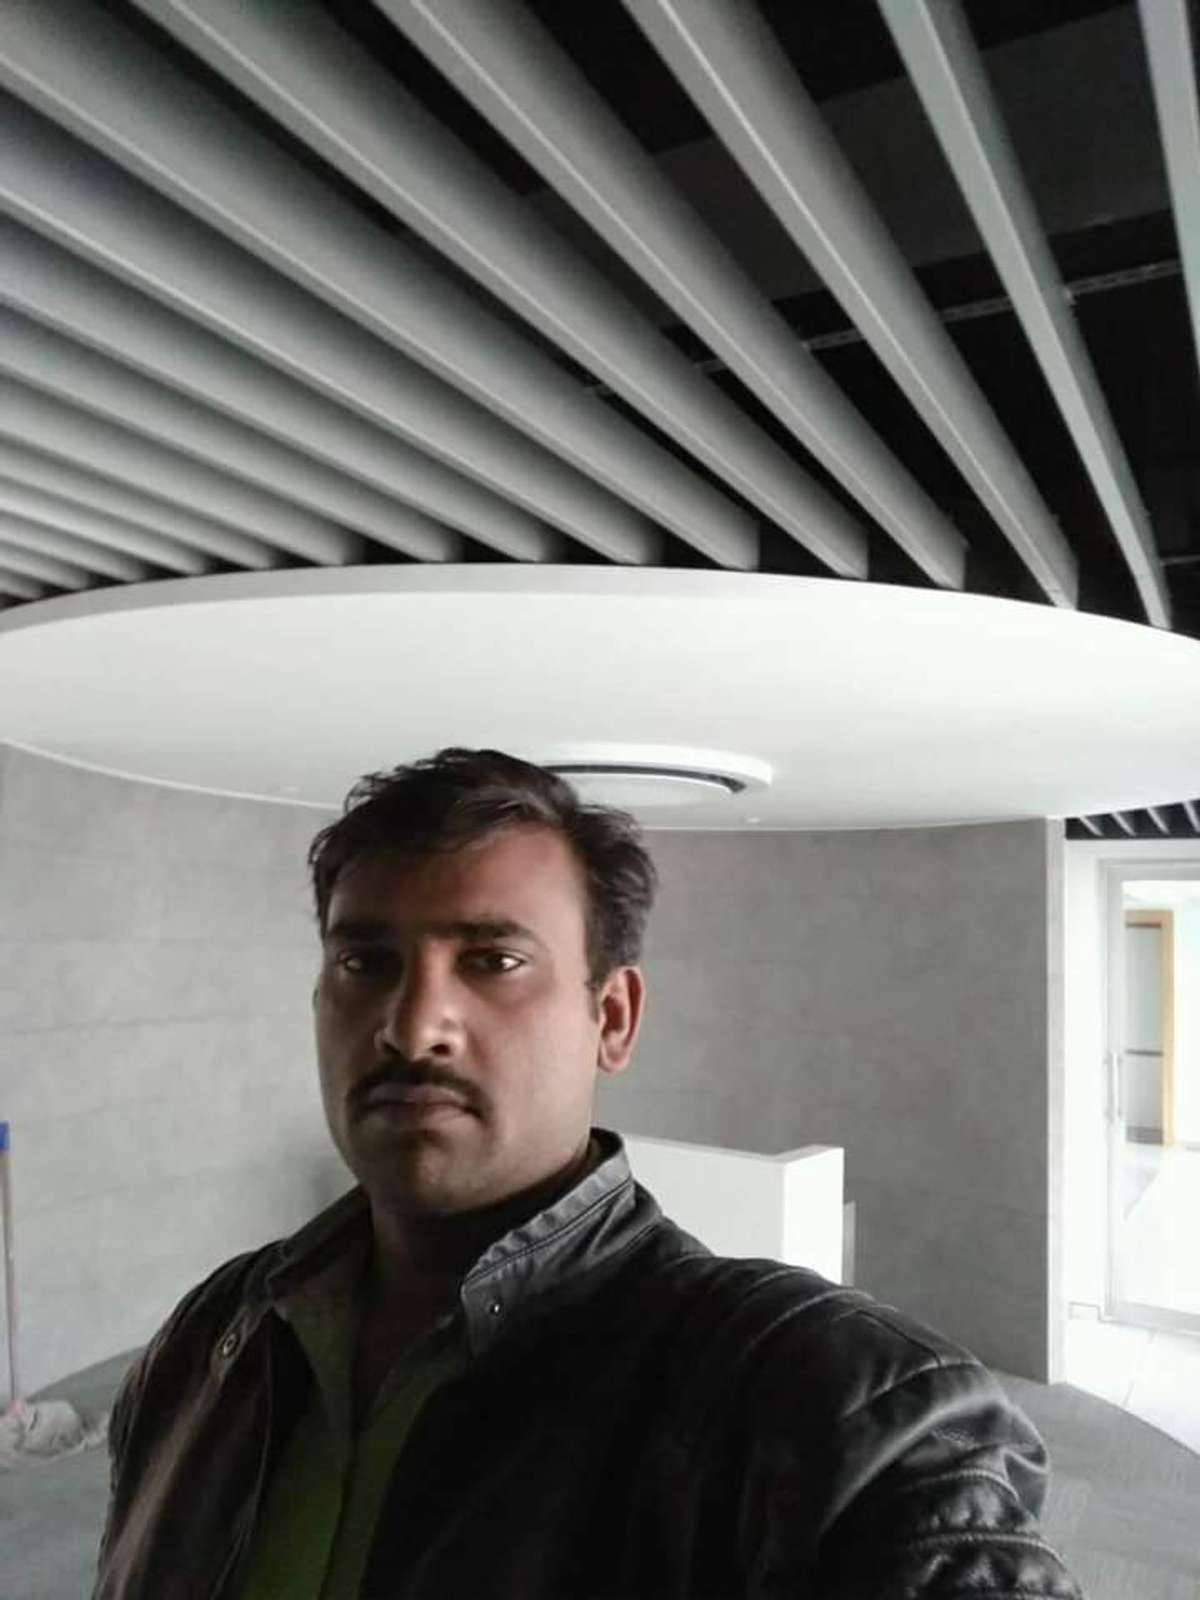 gypsum ceiling 10  square feet vid material ₹50 squire feat 9717816472